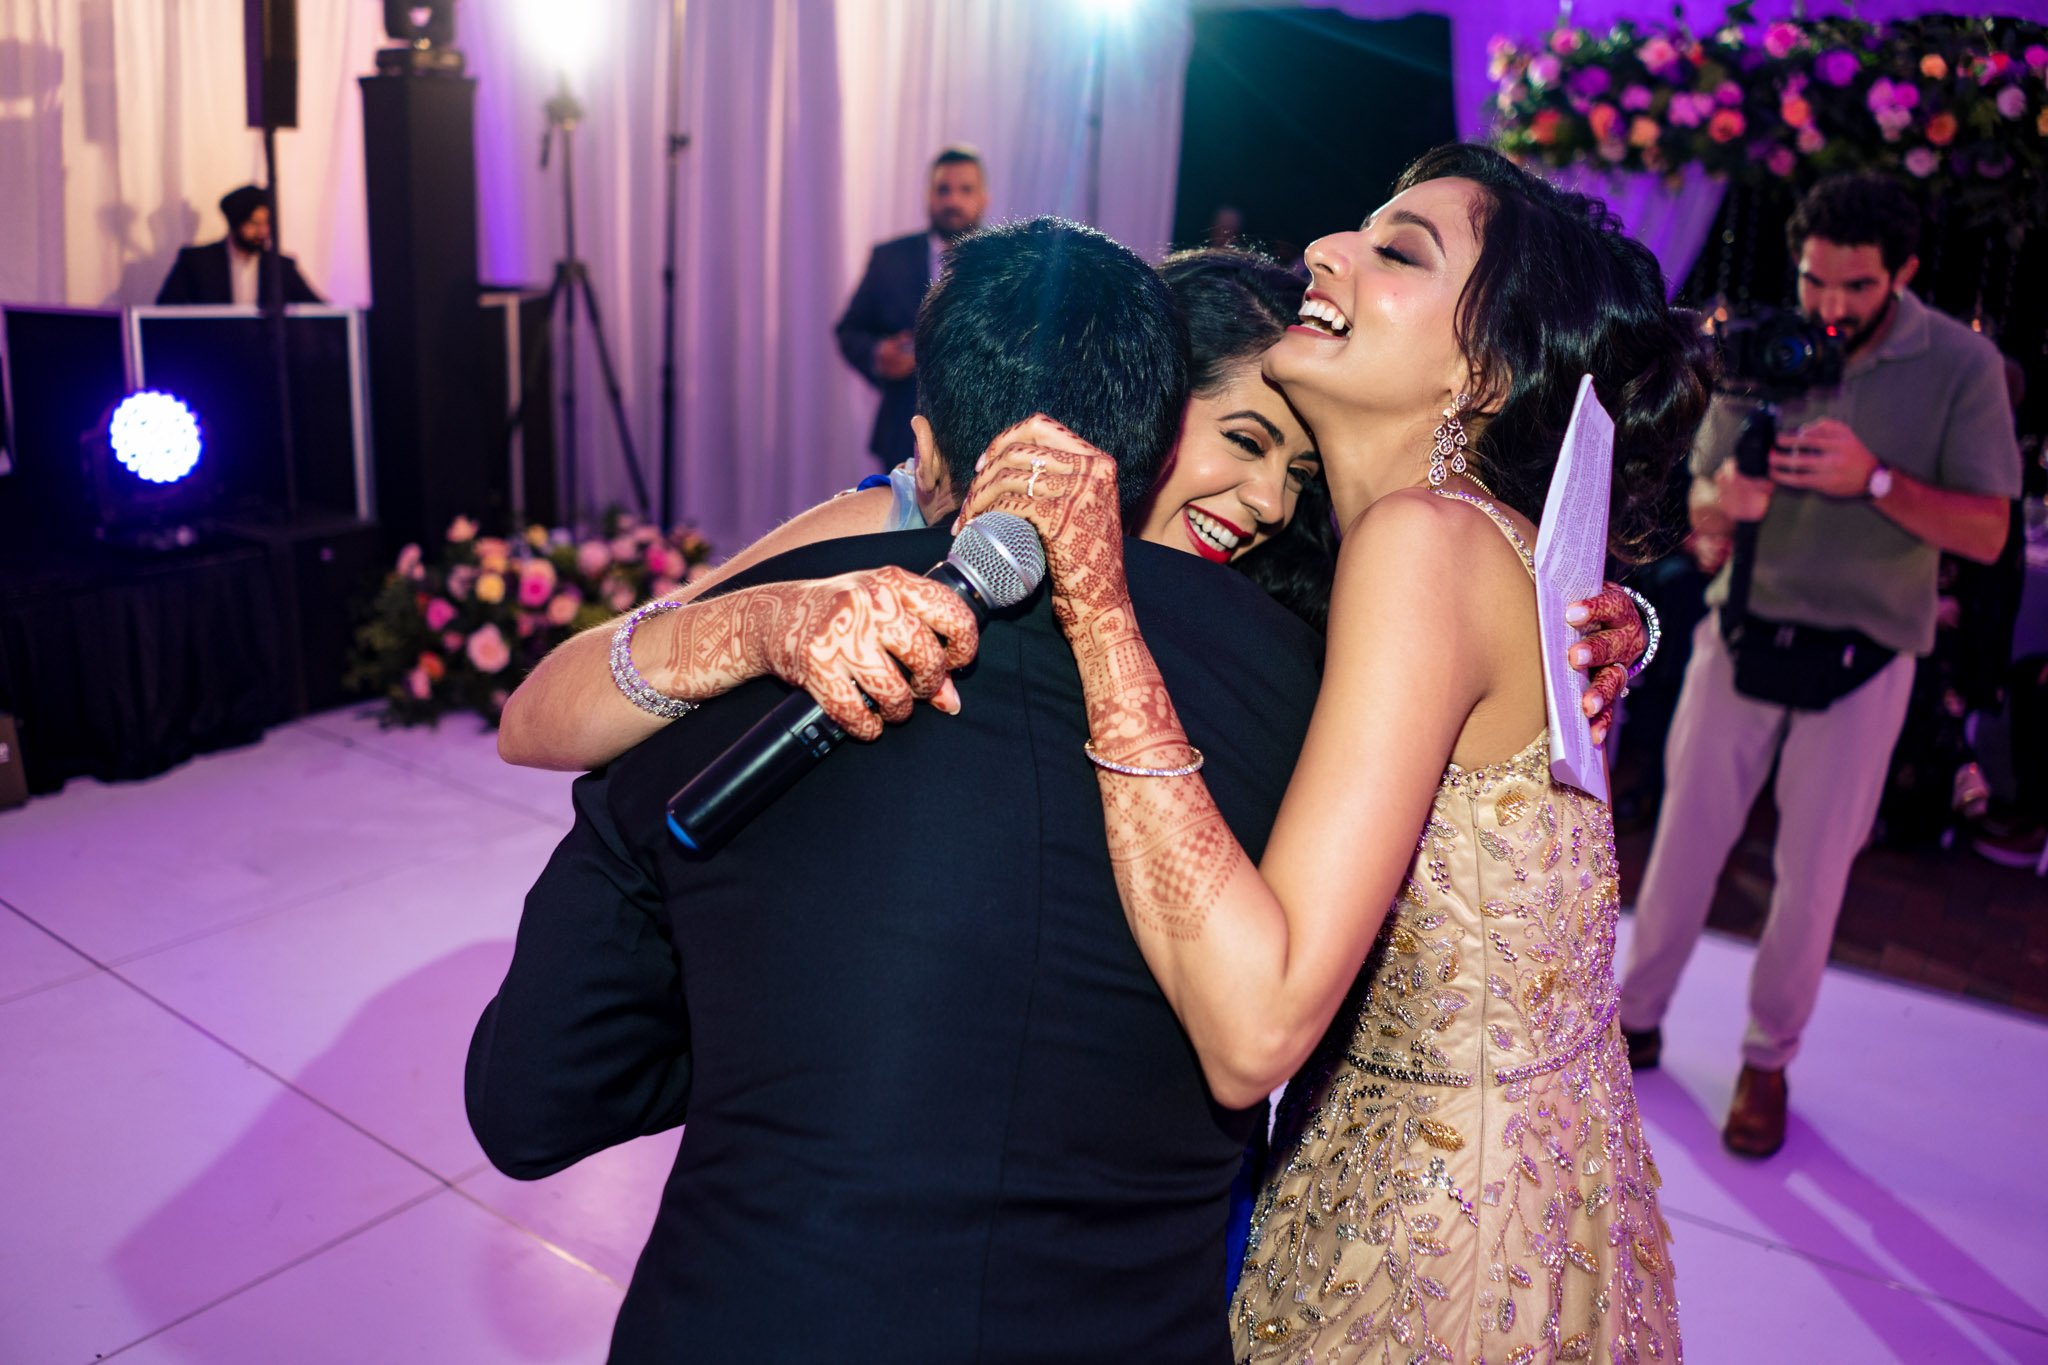 A man and woman embracing at a Biltmore Estate wedding reception.